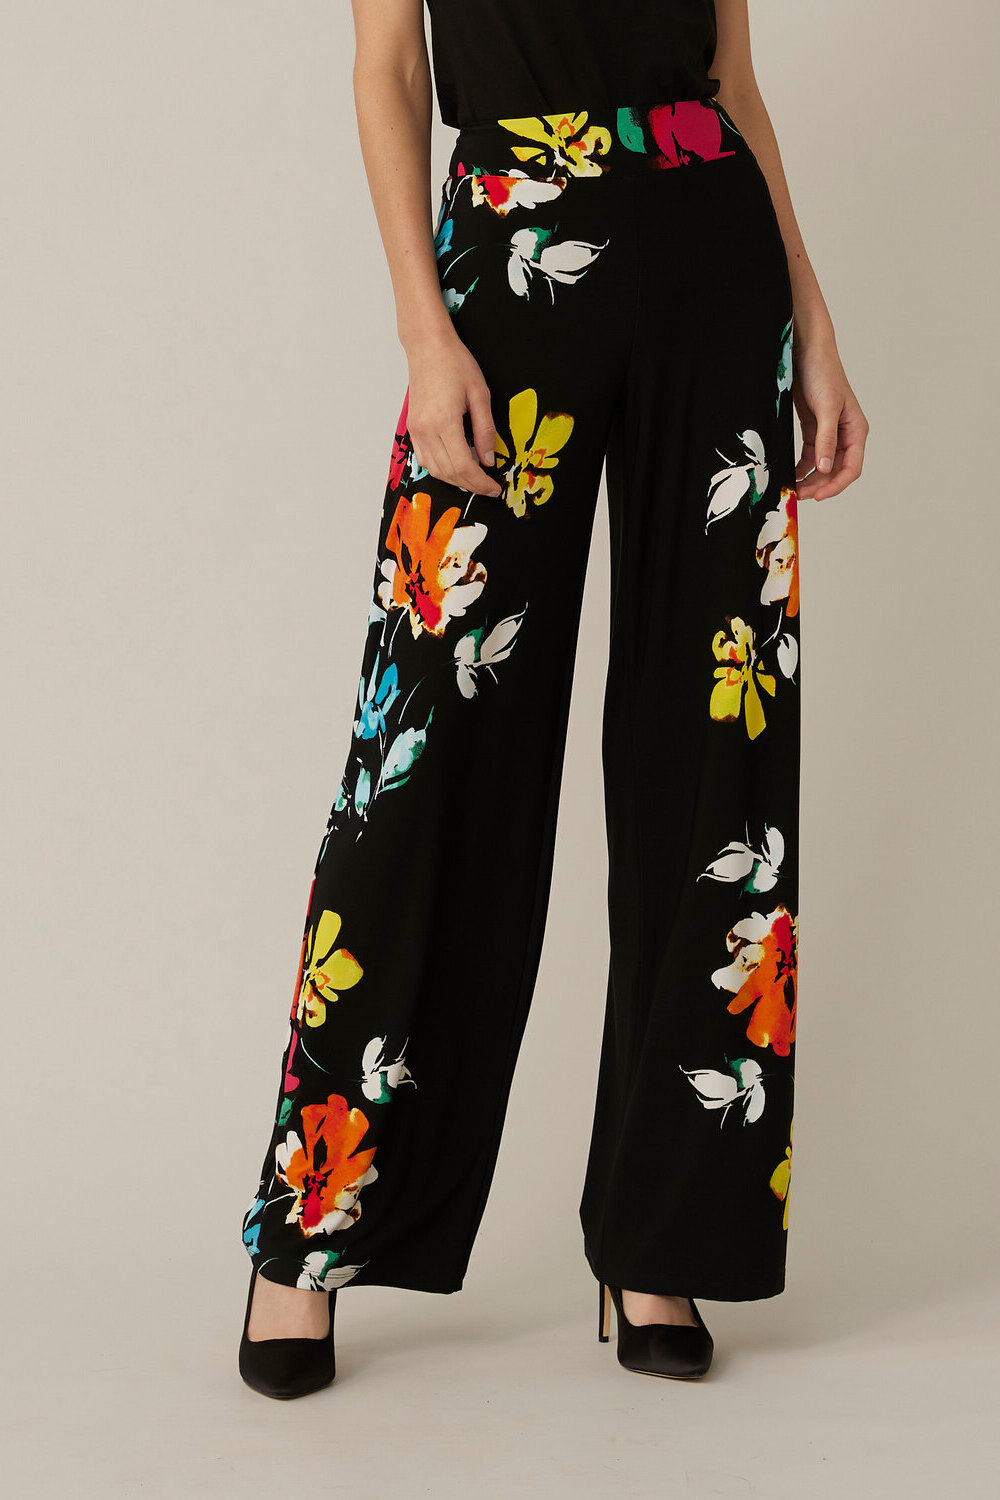 Joseph Ribkoff Floral Wide Leg Pants Style 221320. Black/multi